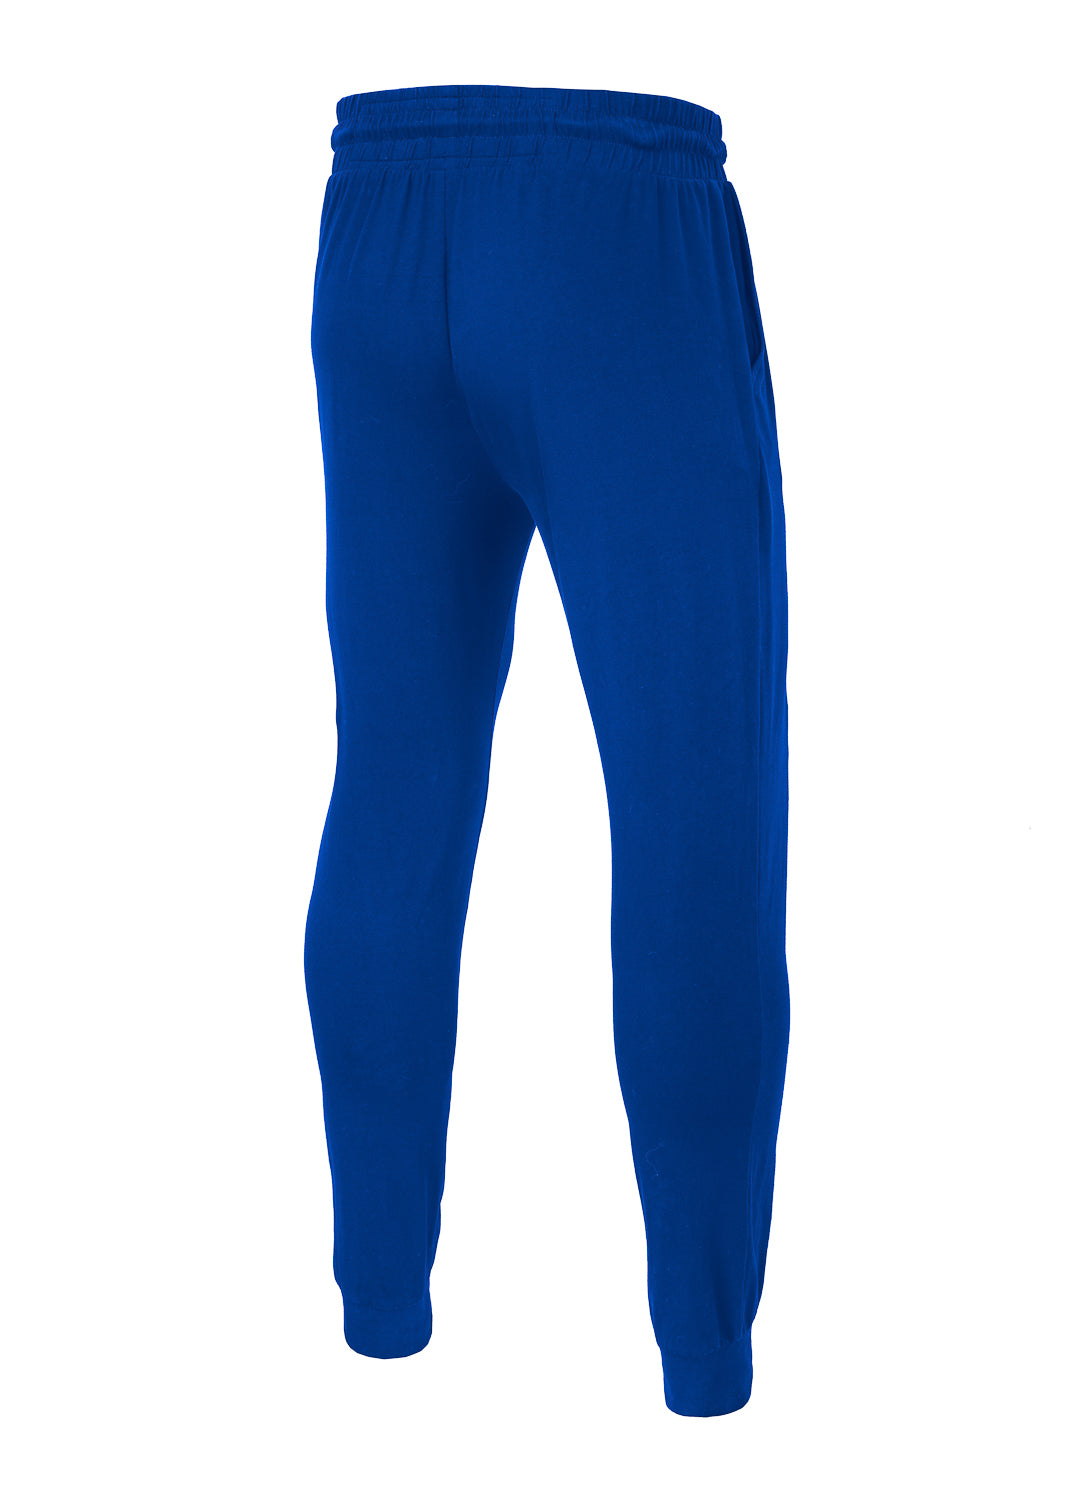 Jogging Pants DURANGO Spandex 210 GSM Royal Blue - Pitbull West Coast International Store 